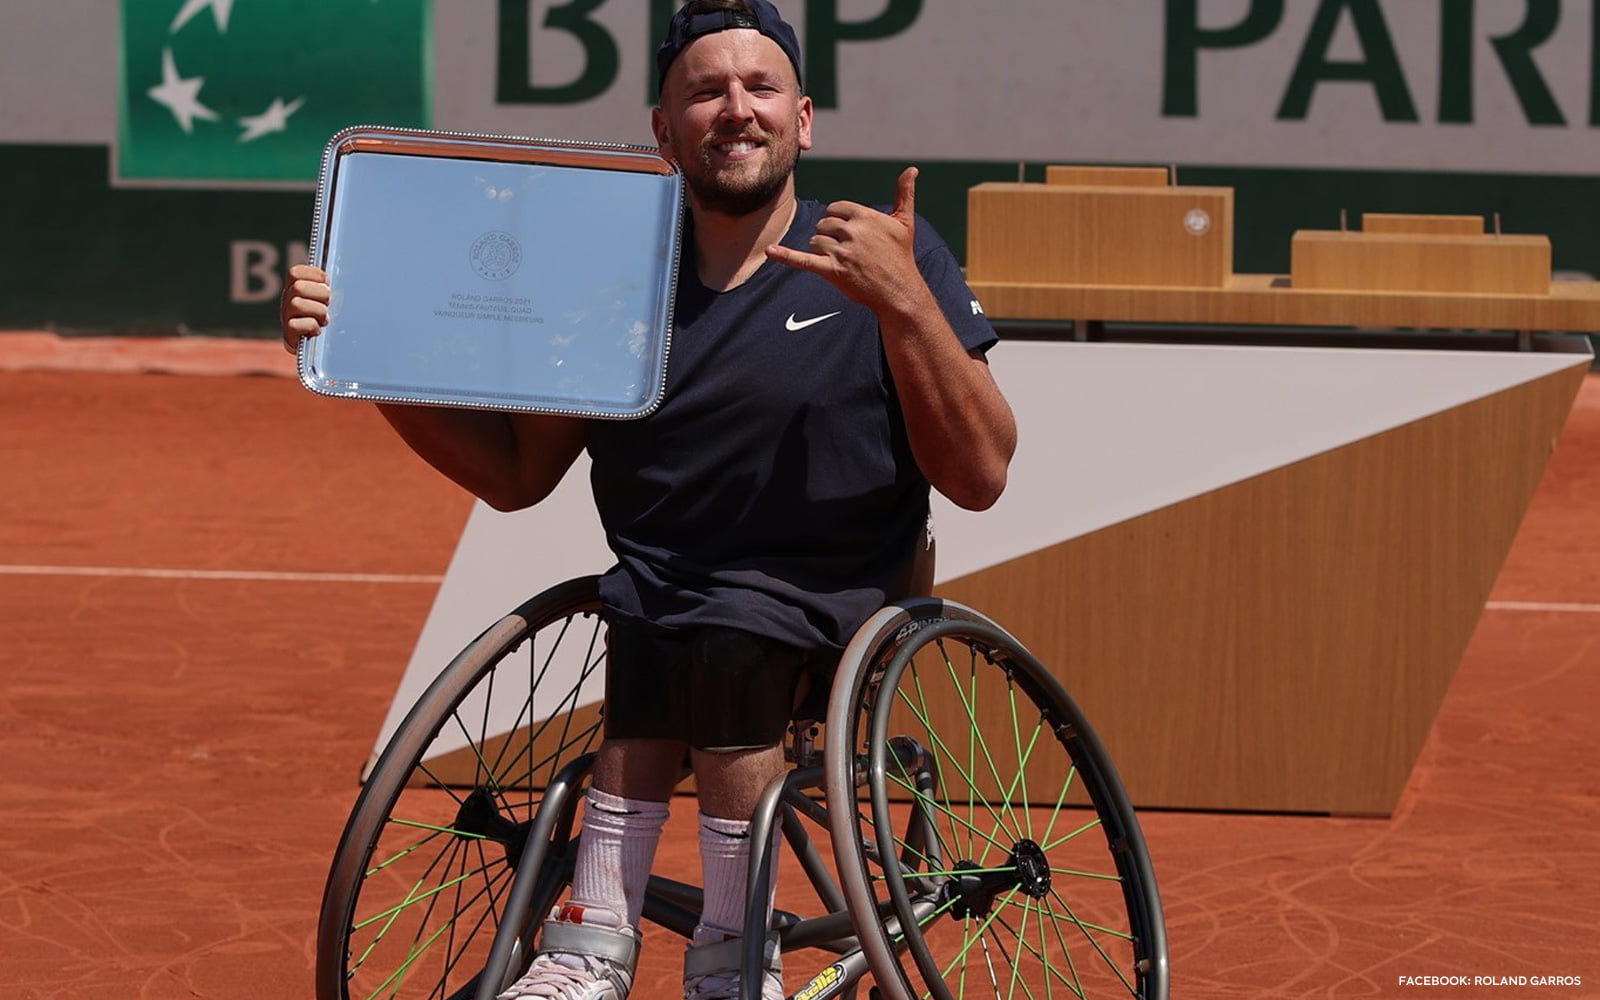 Alcott Wins Third Consecutive Roland Garros Title